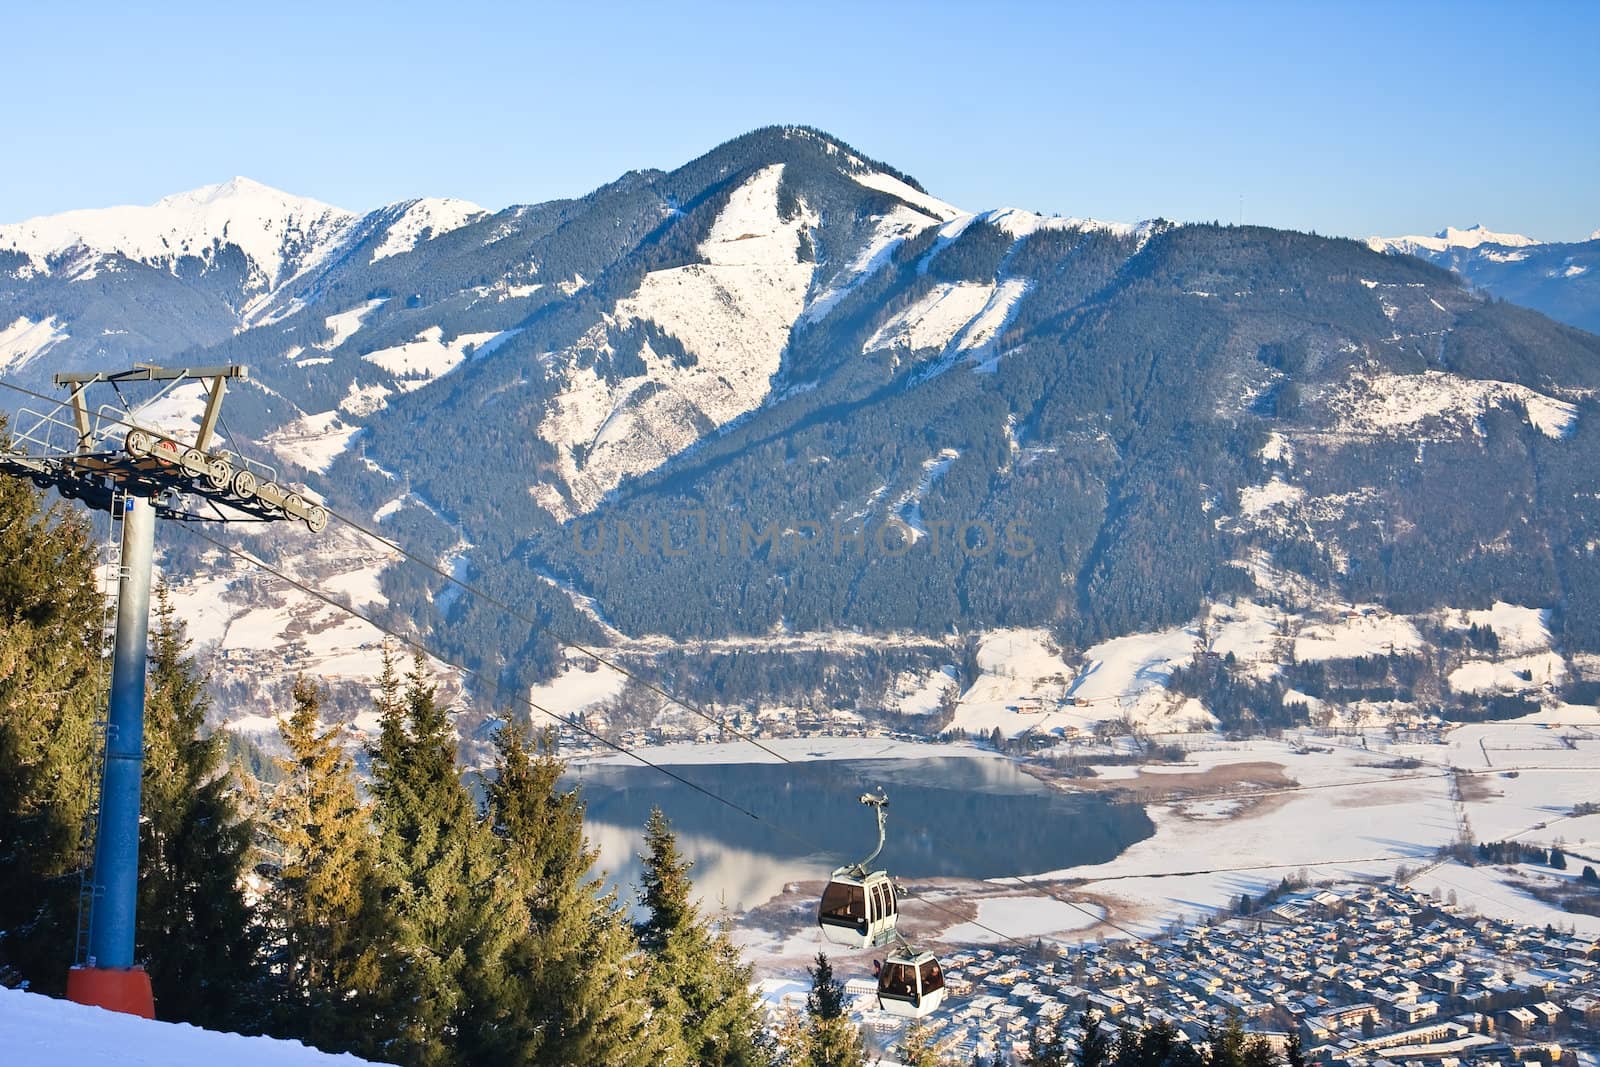 Ski resort Zell am See,  Austria. Alps at winter by nikolpetr